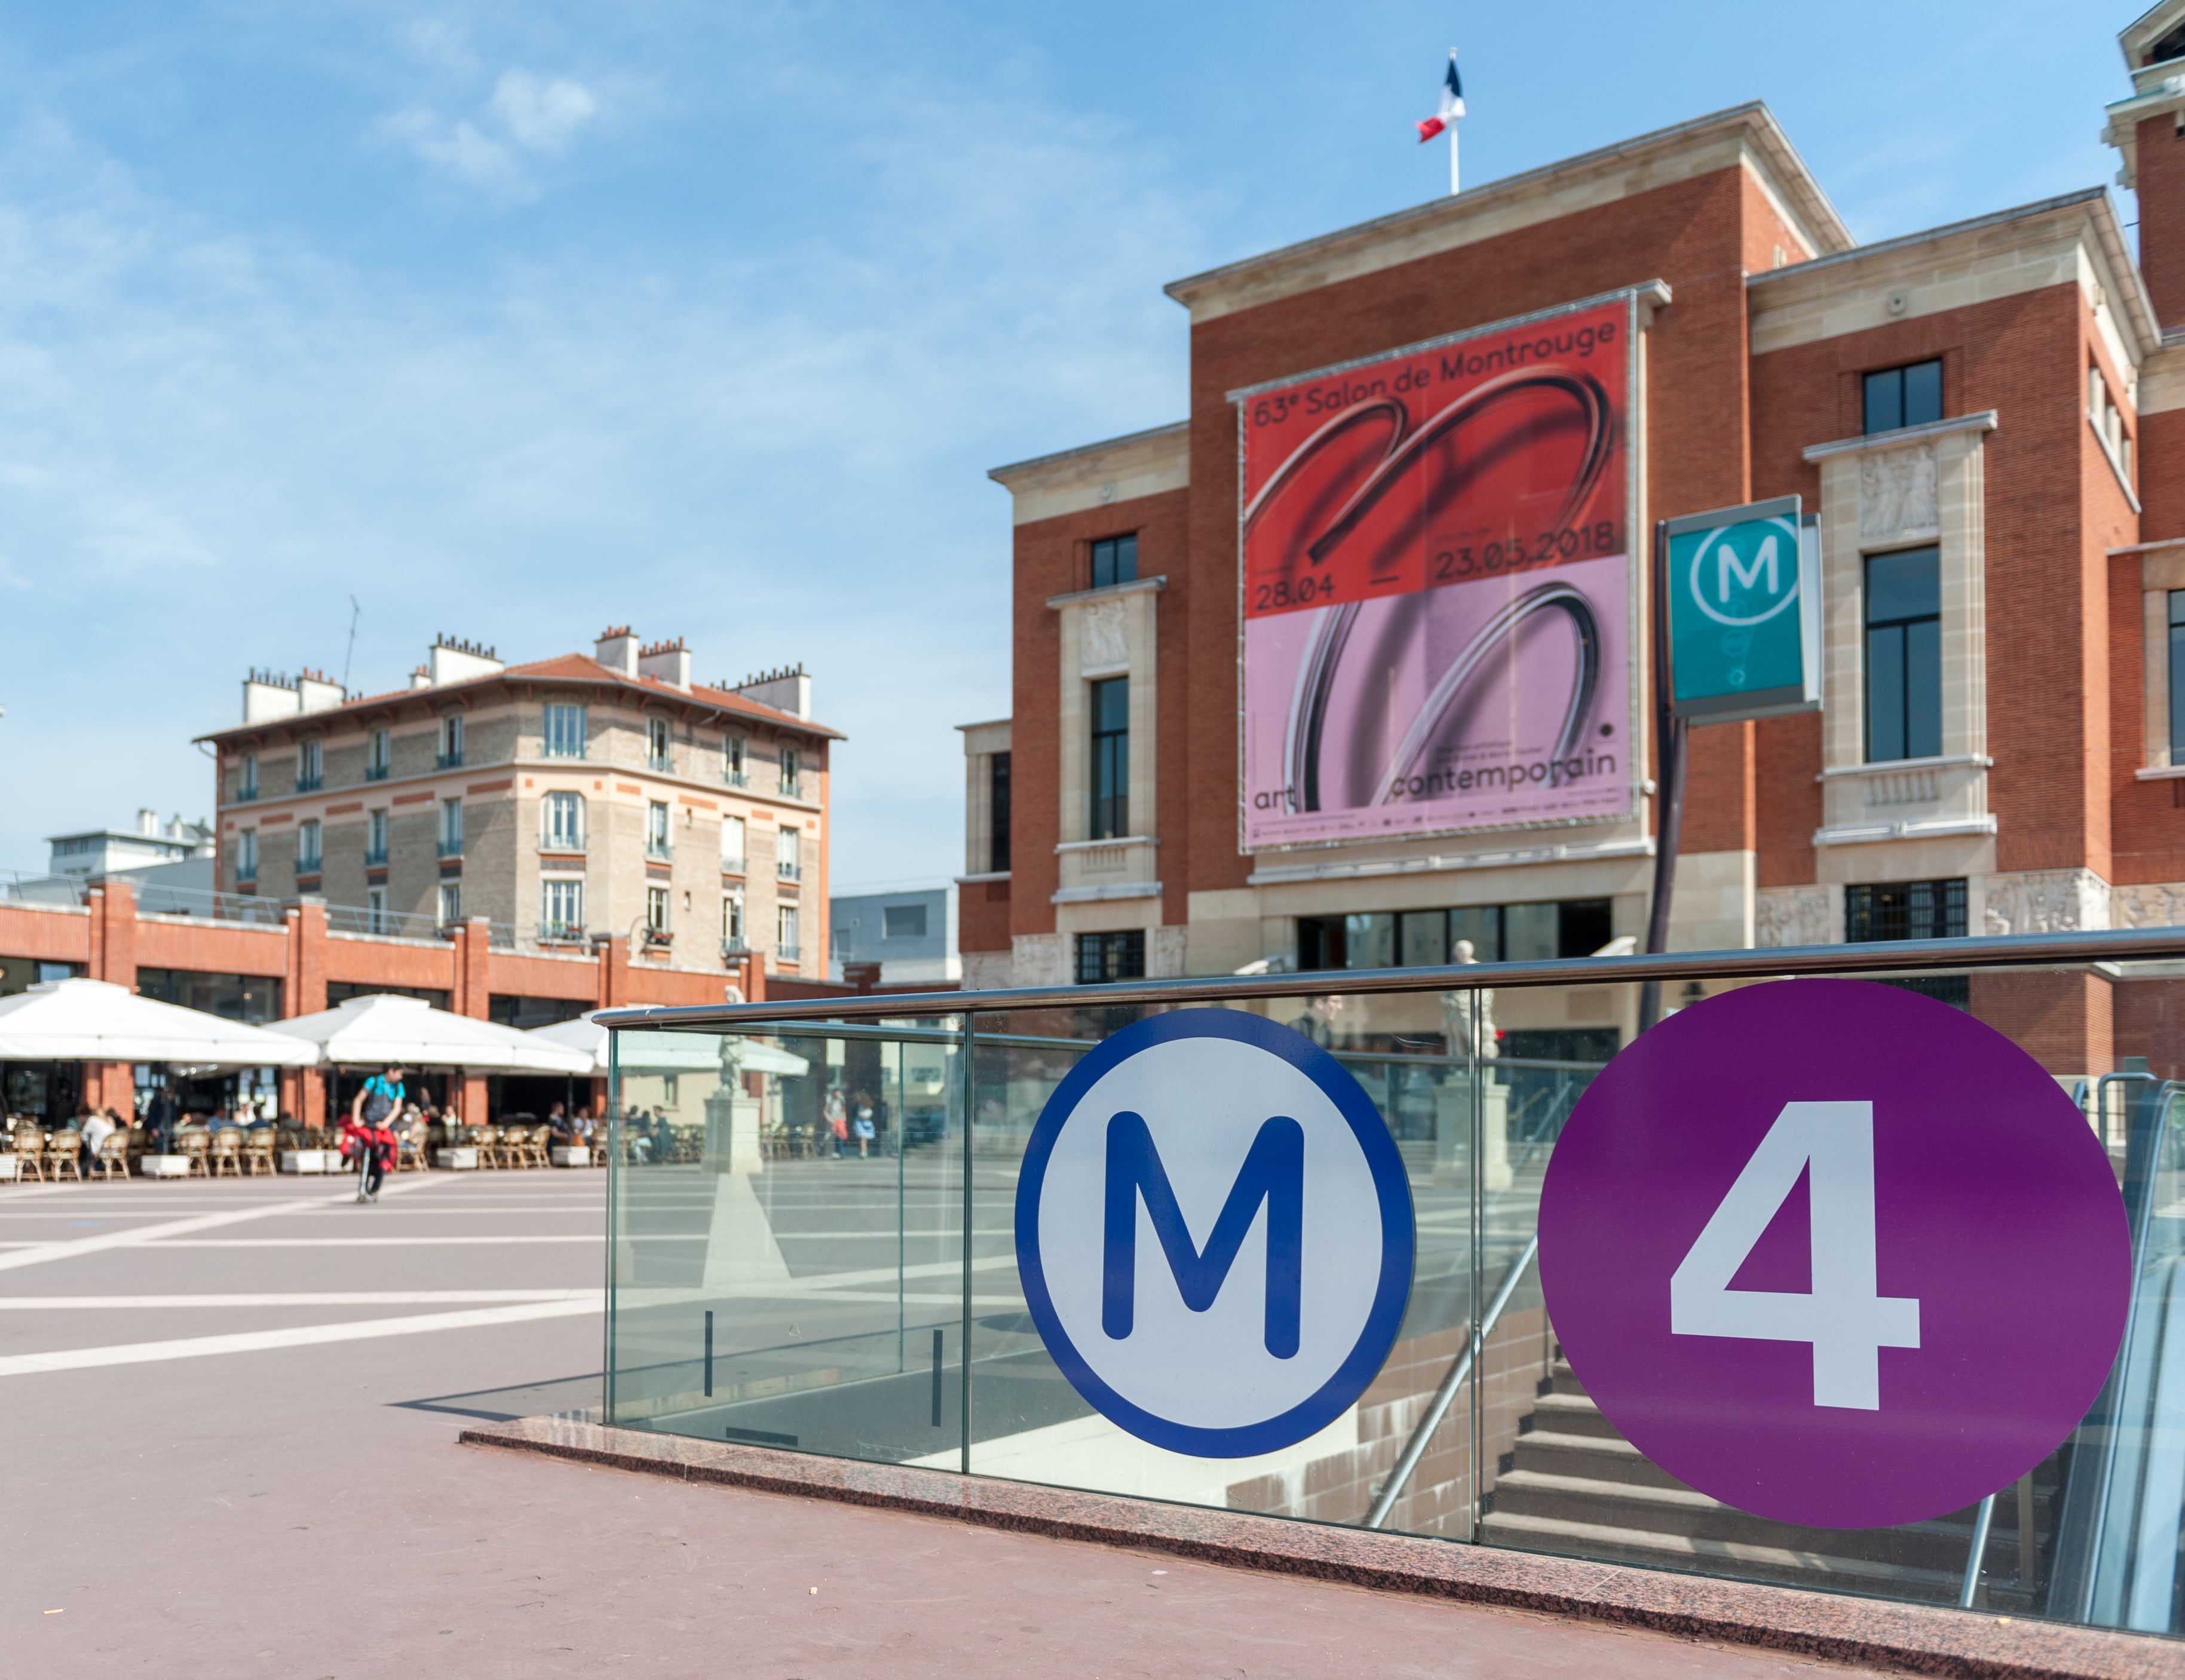 ogic-montrouge-cityzen-metro-4-transport-en-commun